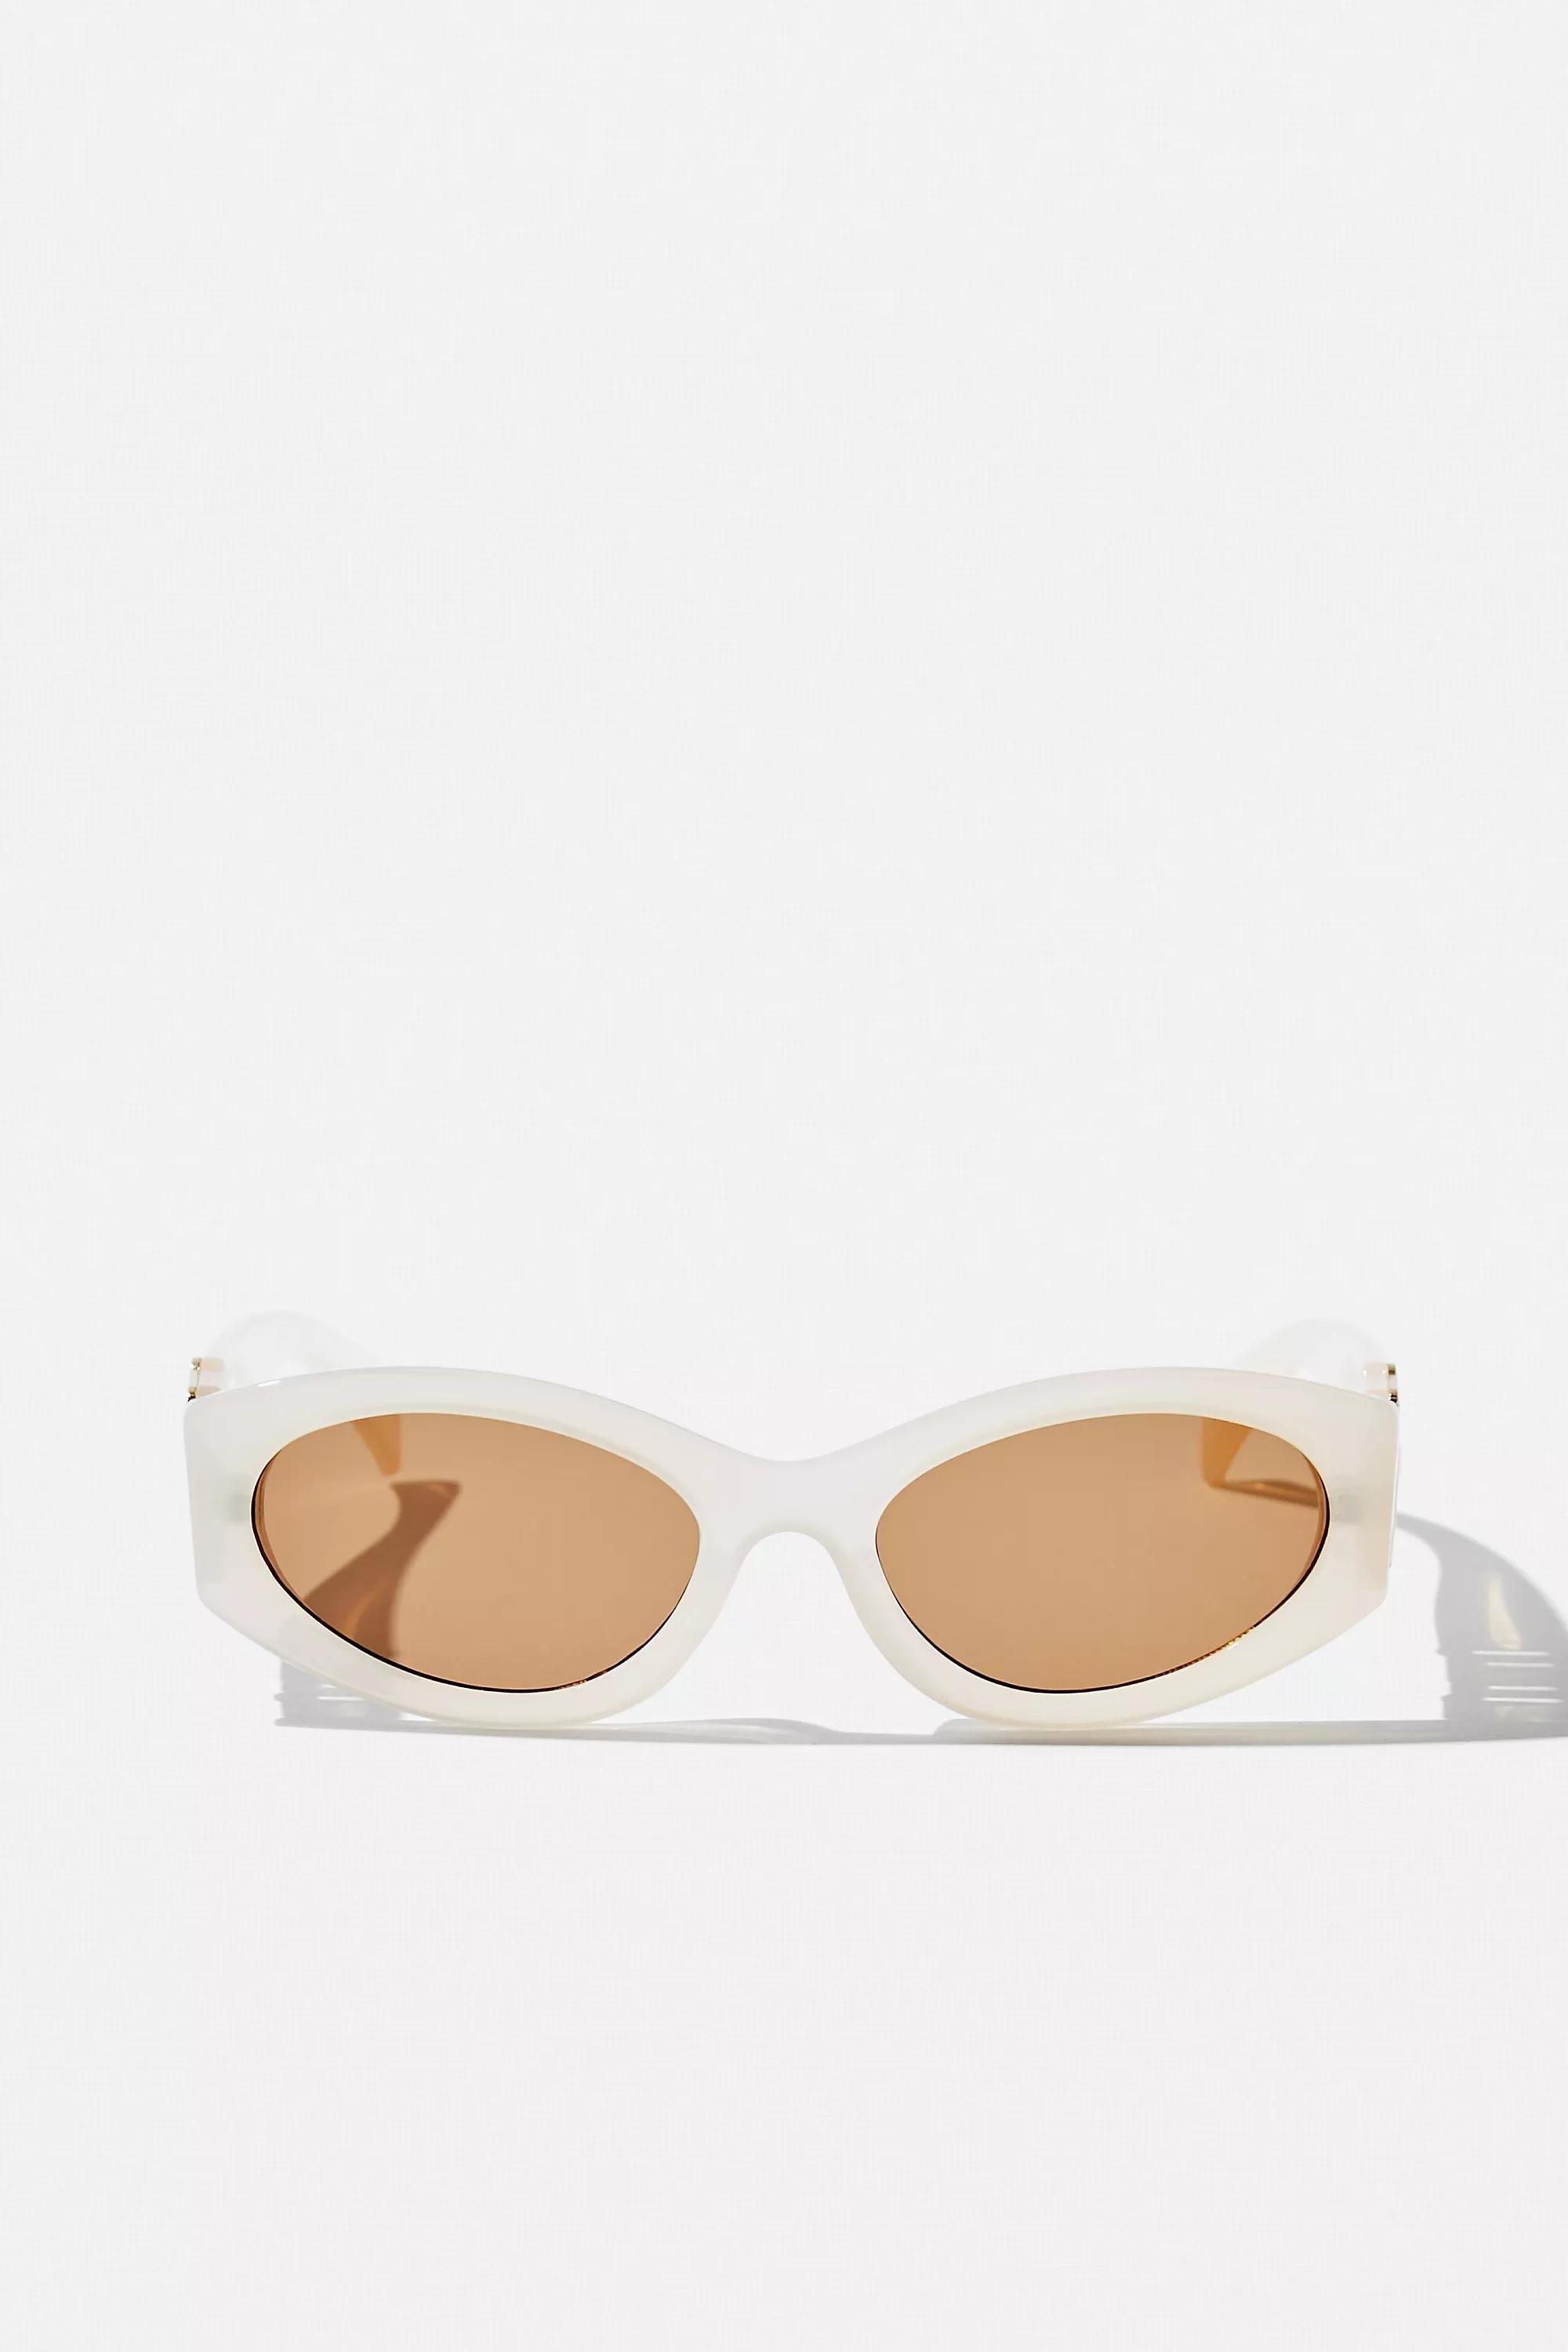 Urban Outfitters - Cream Uo Sedona City Frame Sunglasses